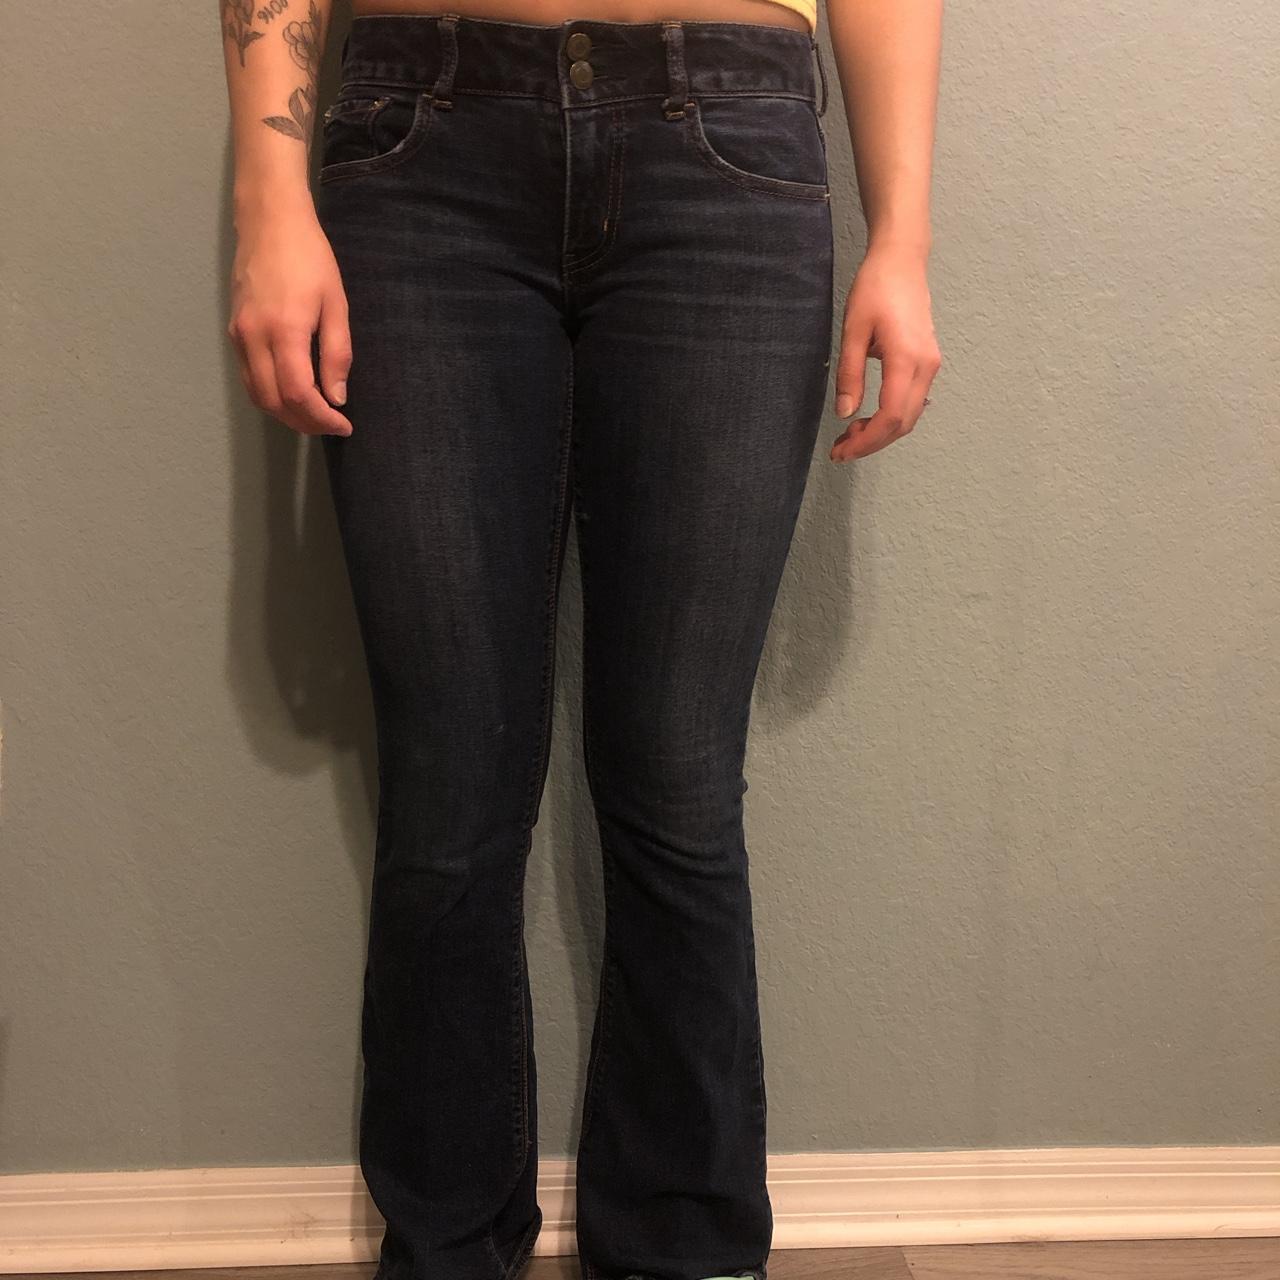 American eagle bell bottom artist jeans size 4R I'm - Depop